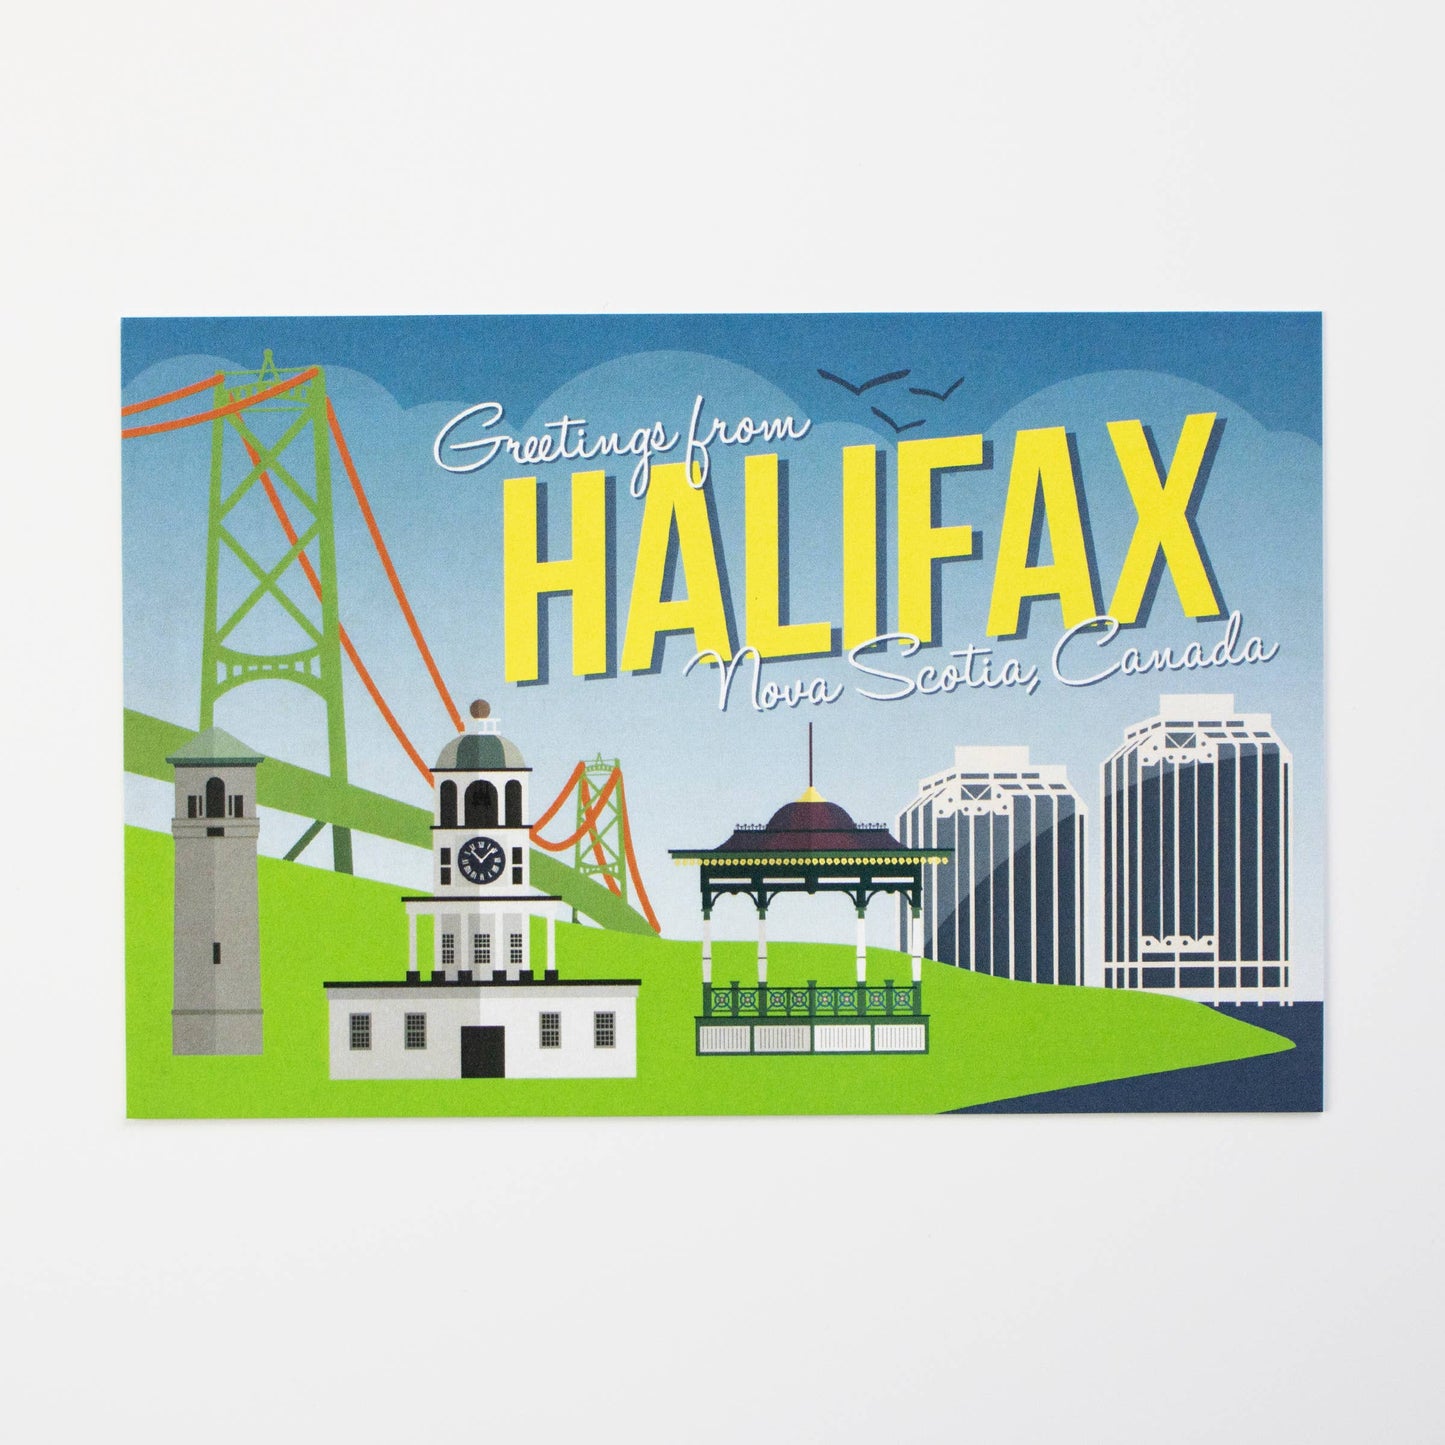 Nova Scotia / Dartmouth / Halifax Postcard